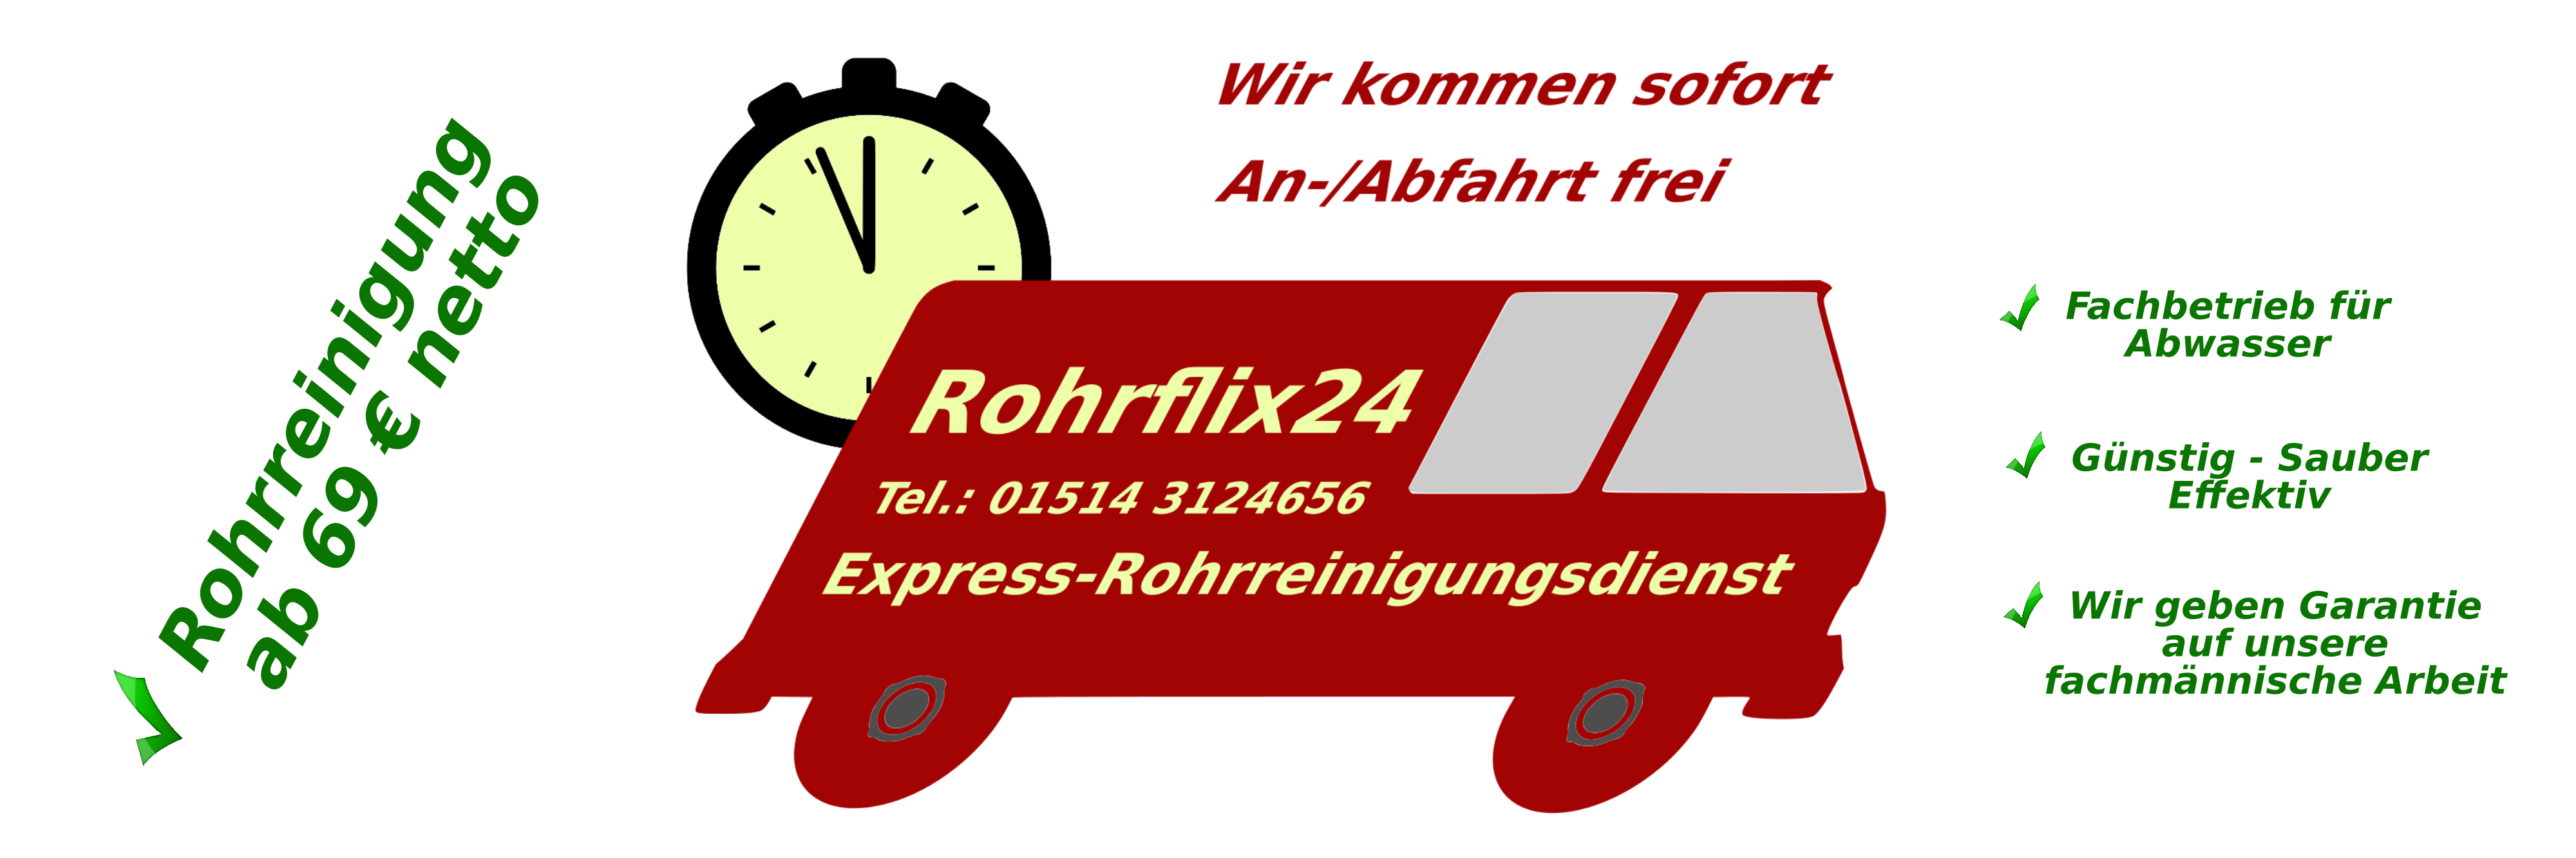 rohrflix24